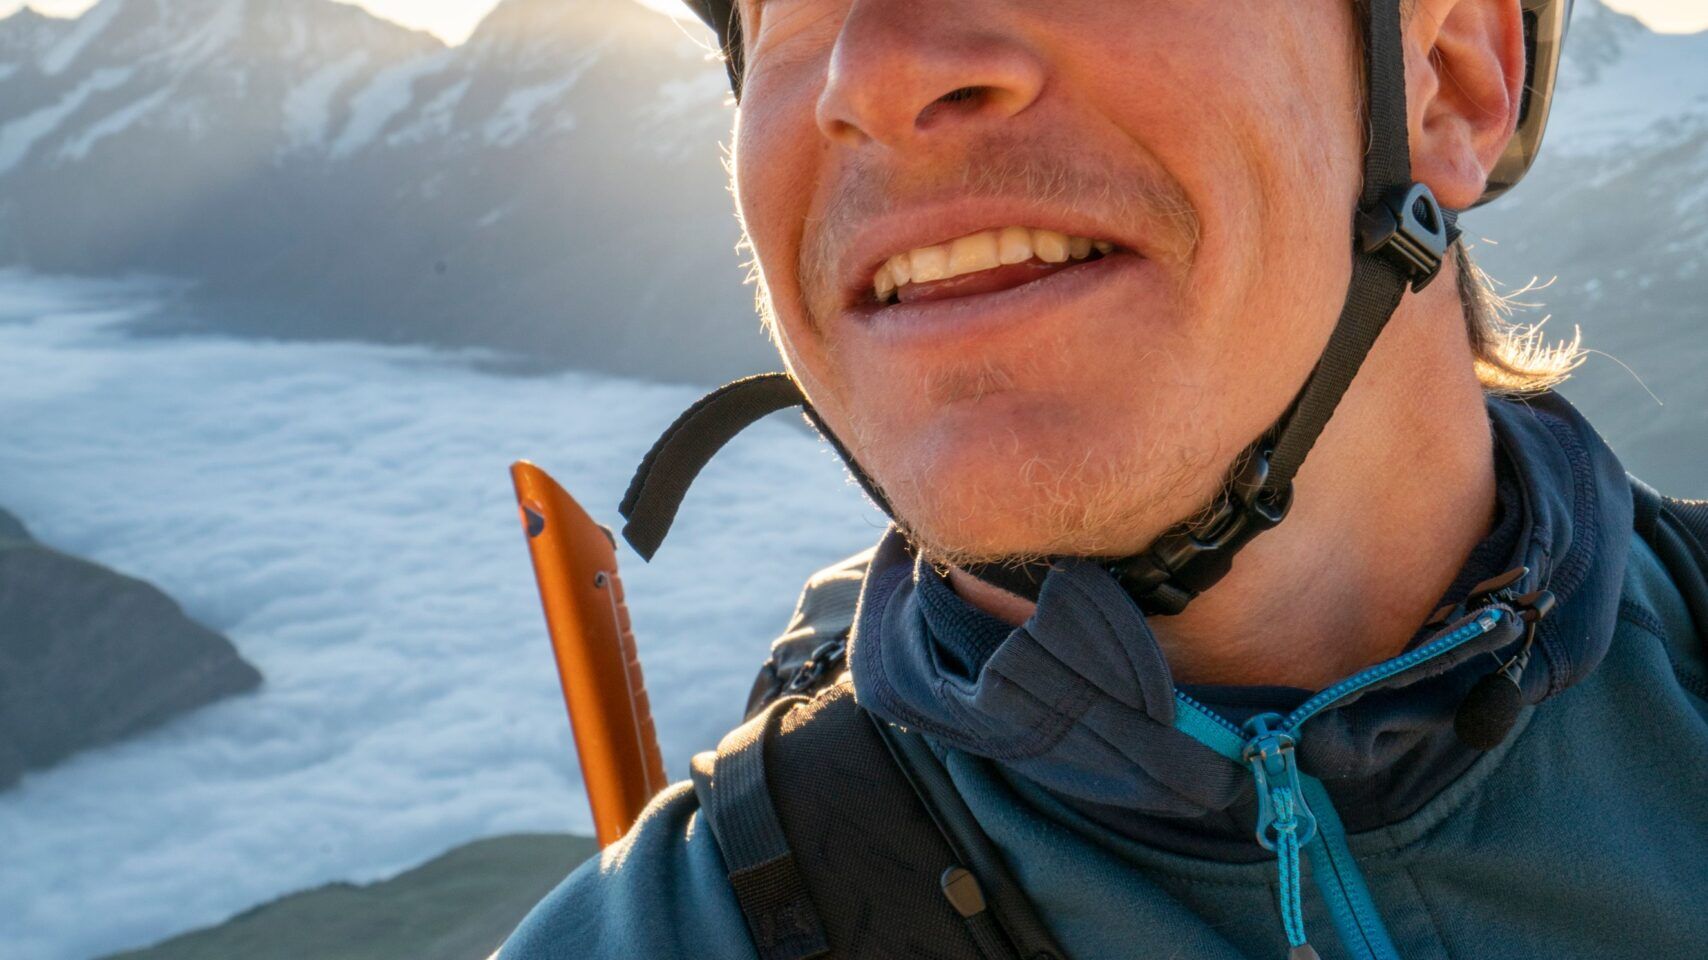 L'alpinista e freeskier vallesano Jérémie Heitz